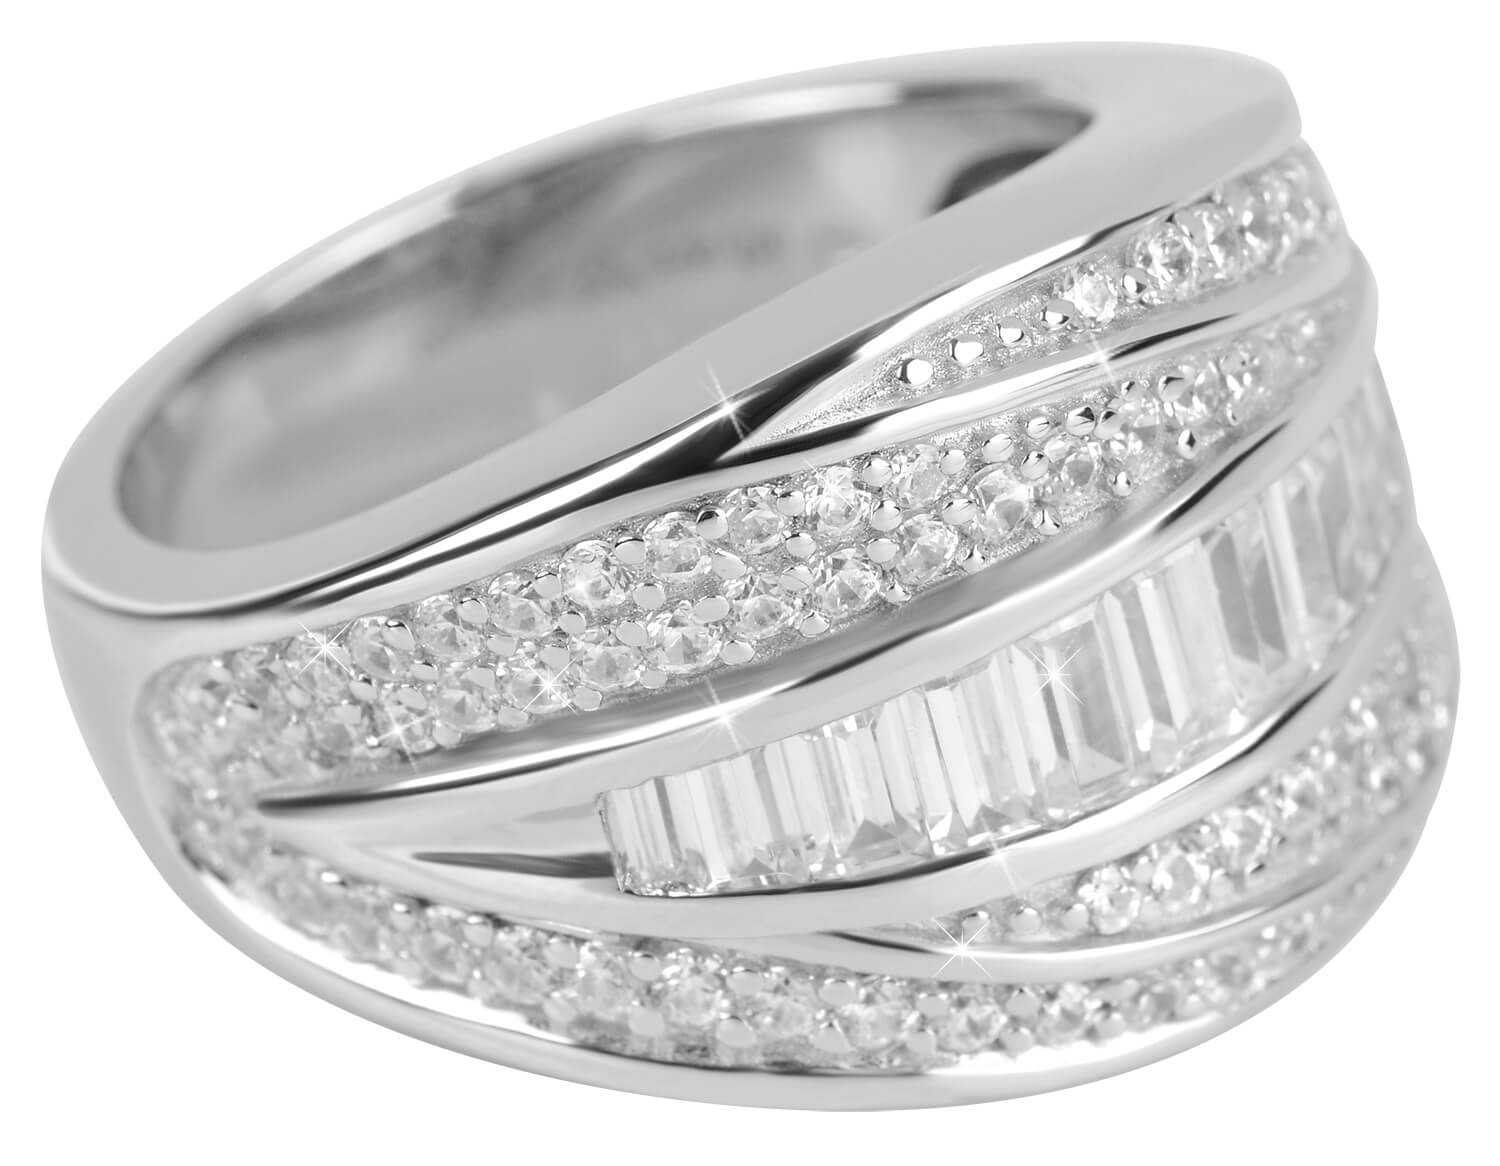 Silver Cat Luxusné prsteň so zirkónmi SC285 52 mm